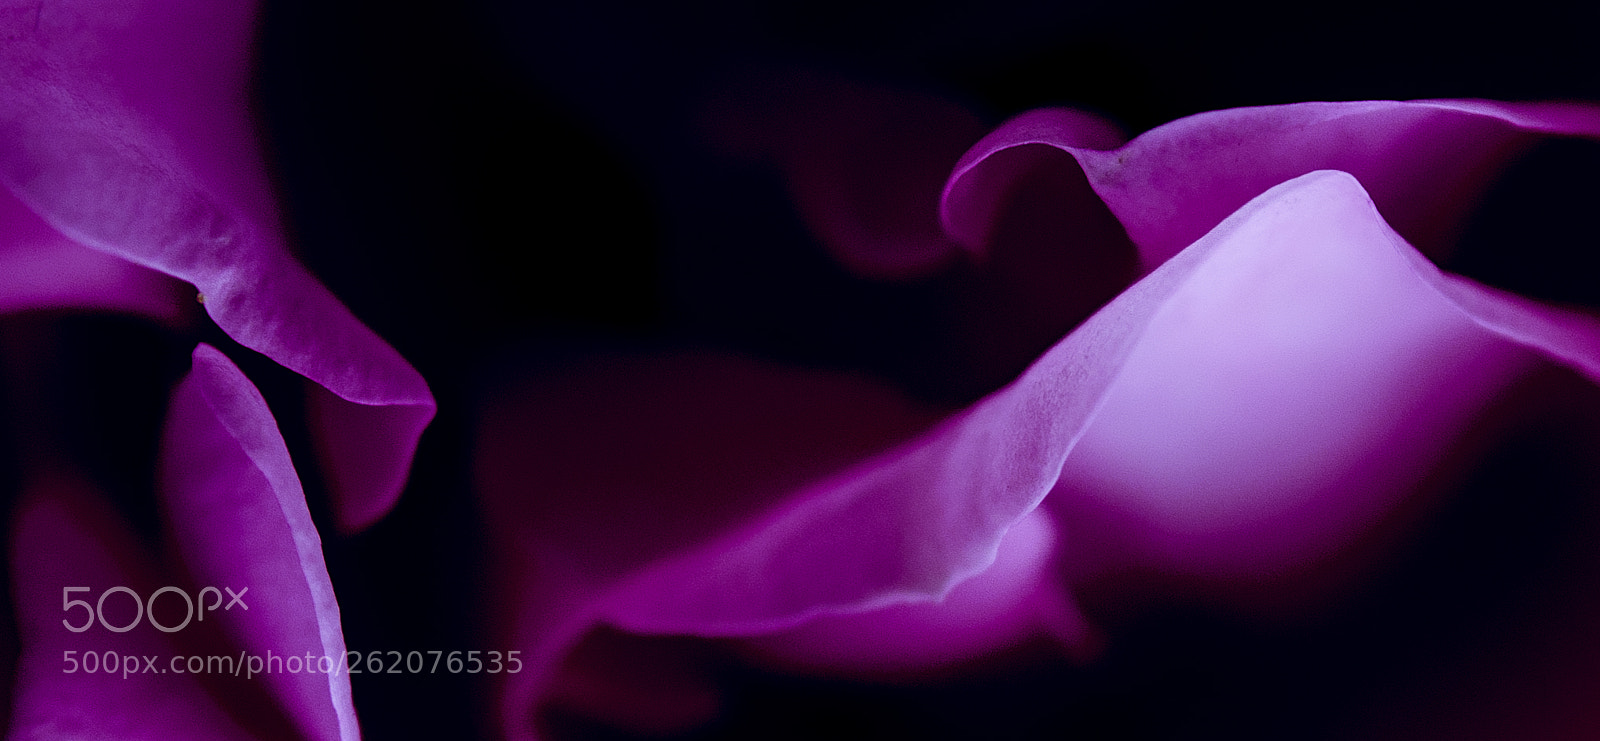 Nikon 1 V1 sample photo. The violet rose photography